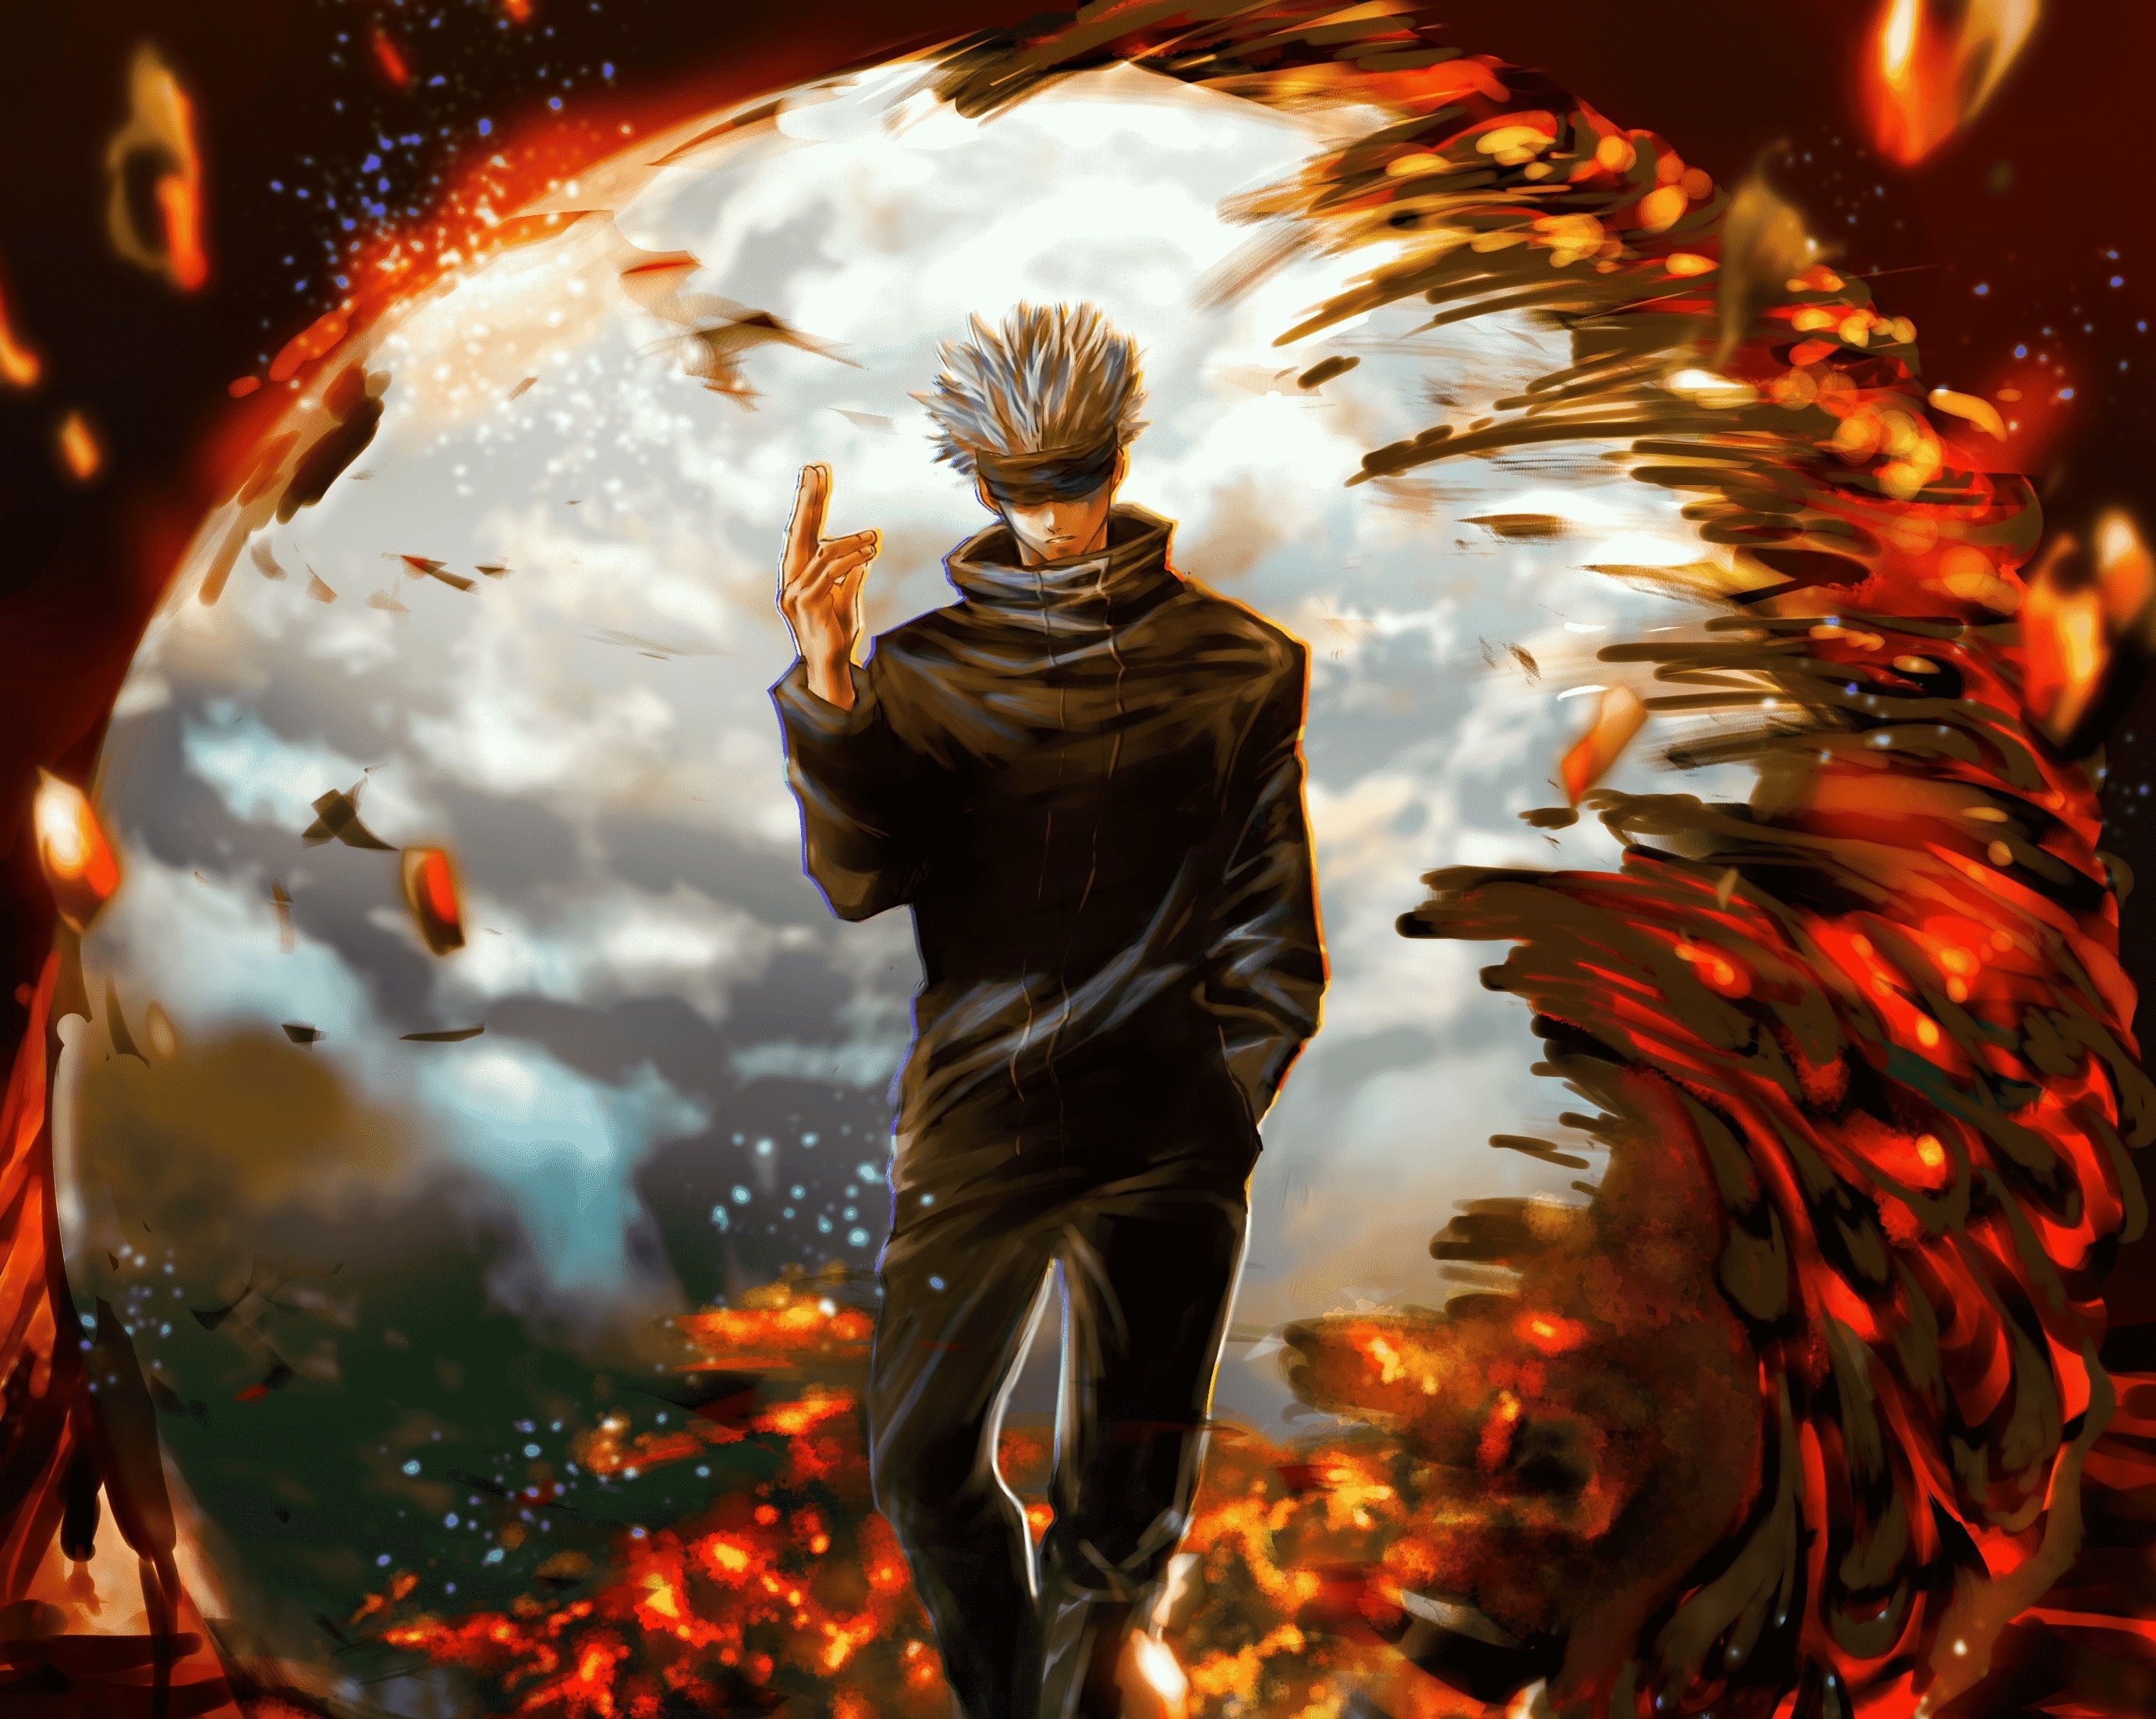 Satoru Gojo Jujutsu Kaisen Art Wallpaper, HD Anime 4K Wallpapers, Image, Photos and Backgrounds